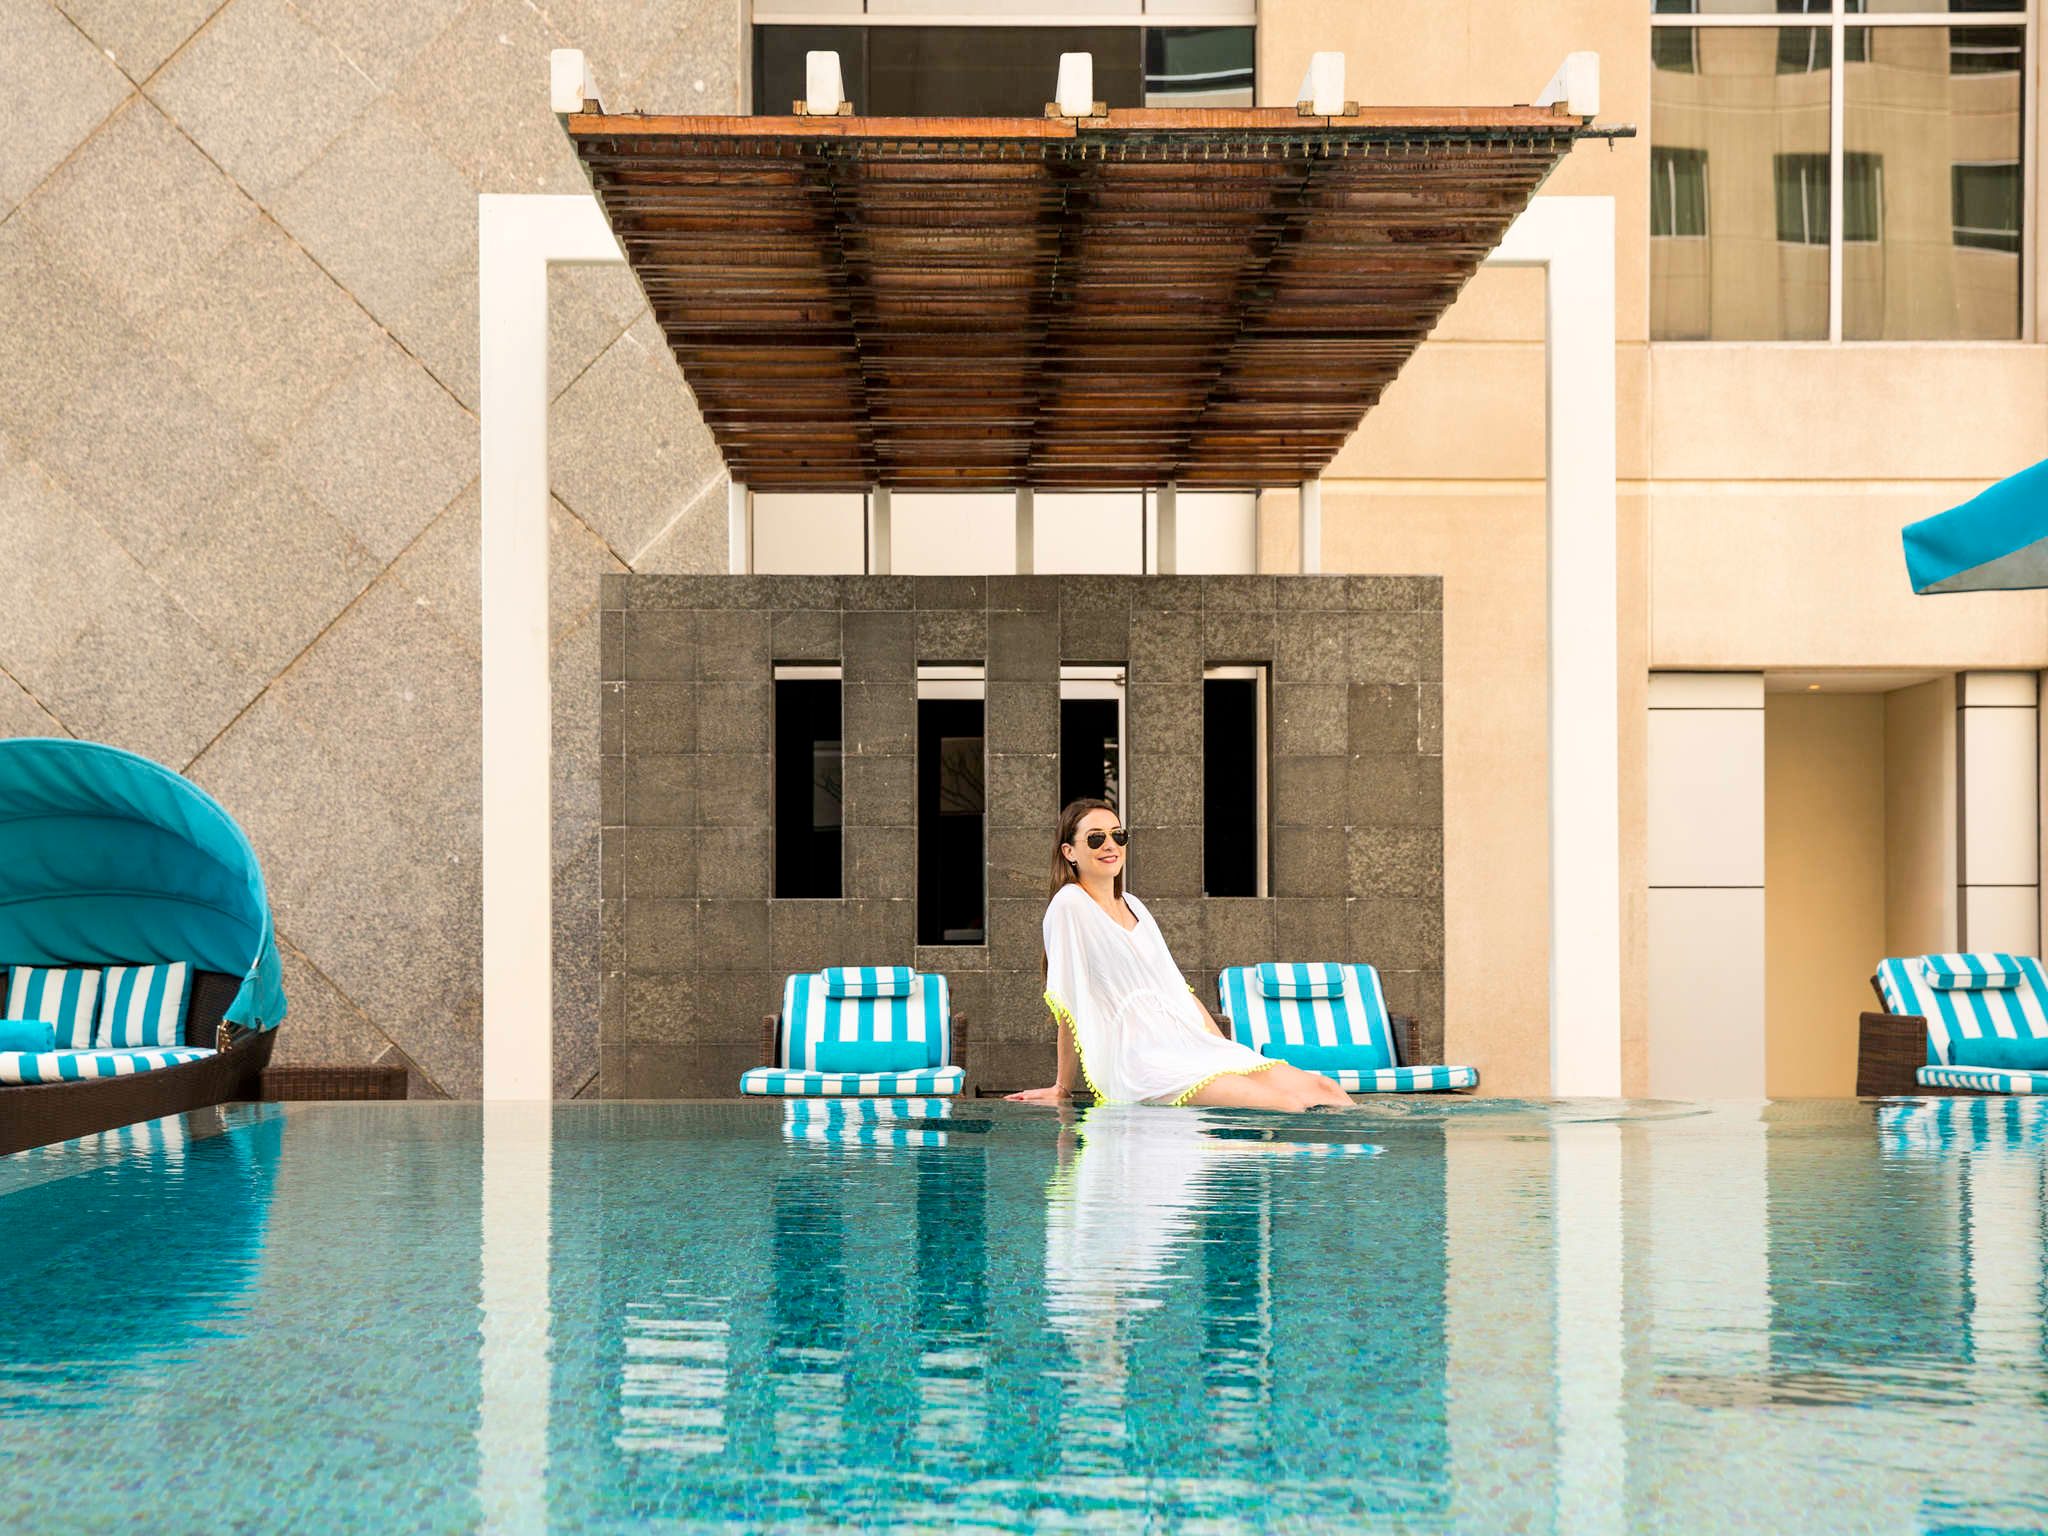 Accor has more than 80 hotels in the UAE, including the Novotel Dubai Deira City Centre